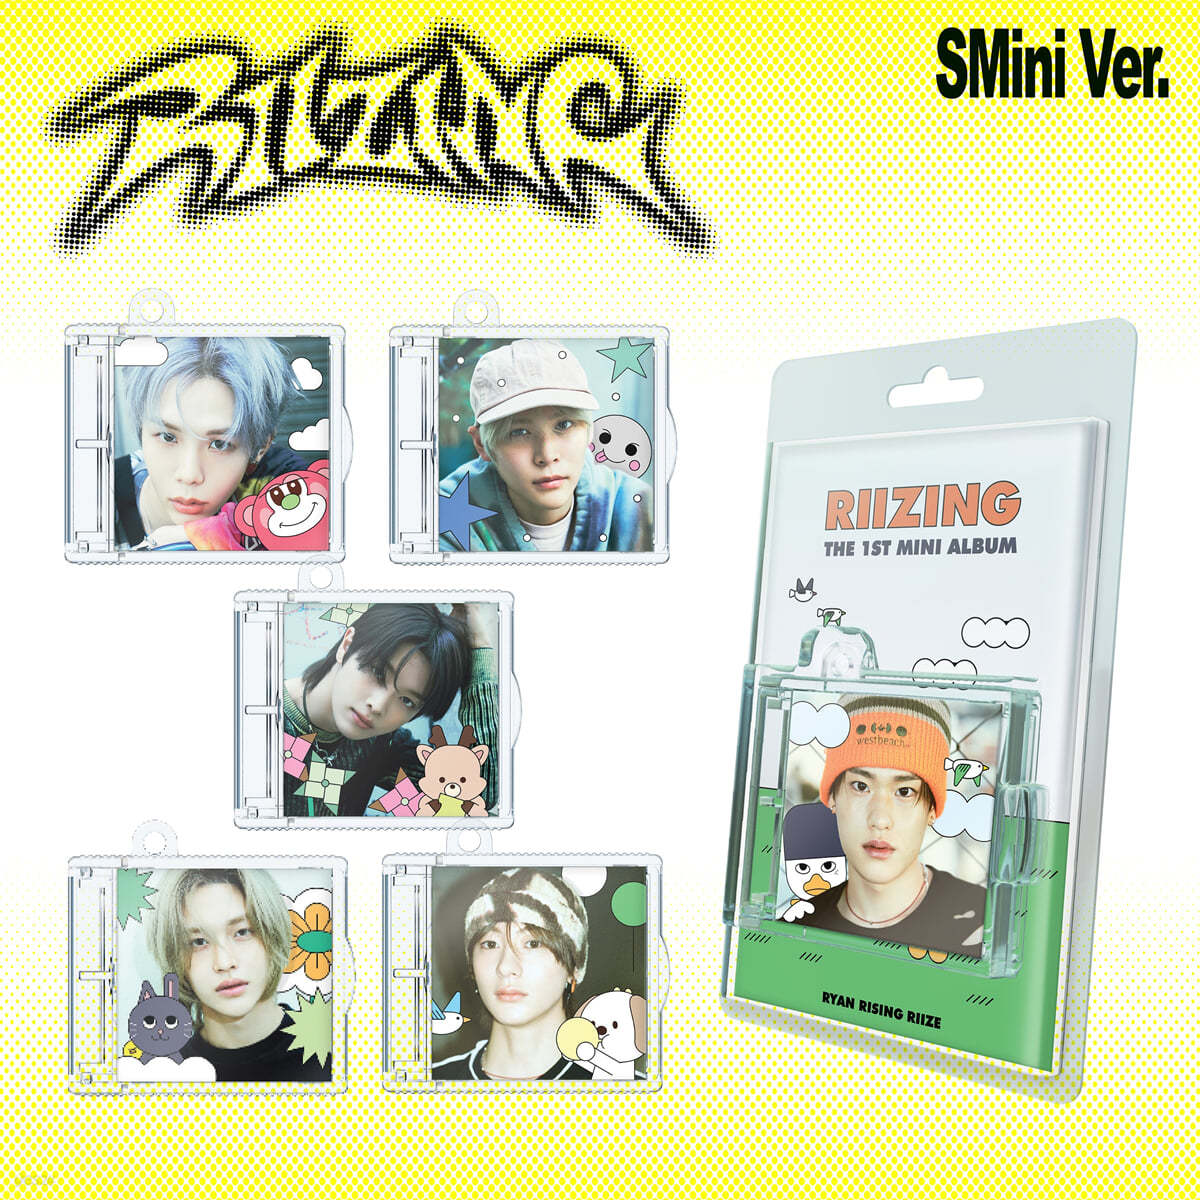 RIIZE The 1st Mini Album – RIIZING (SMini Ver.) (Random)